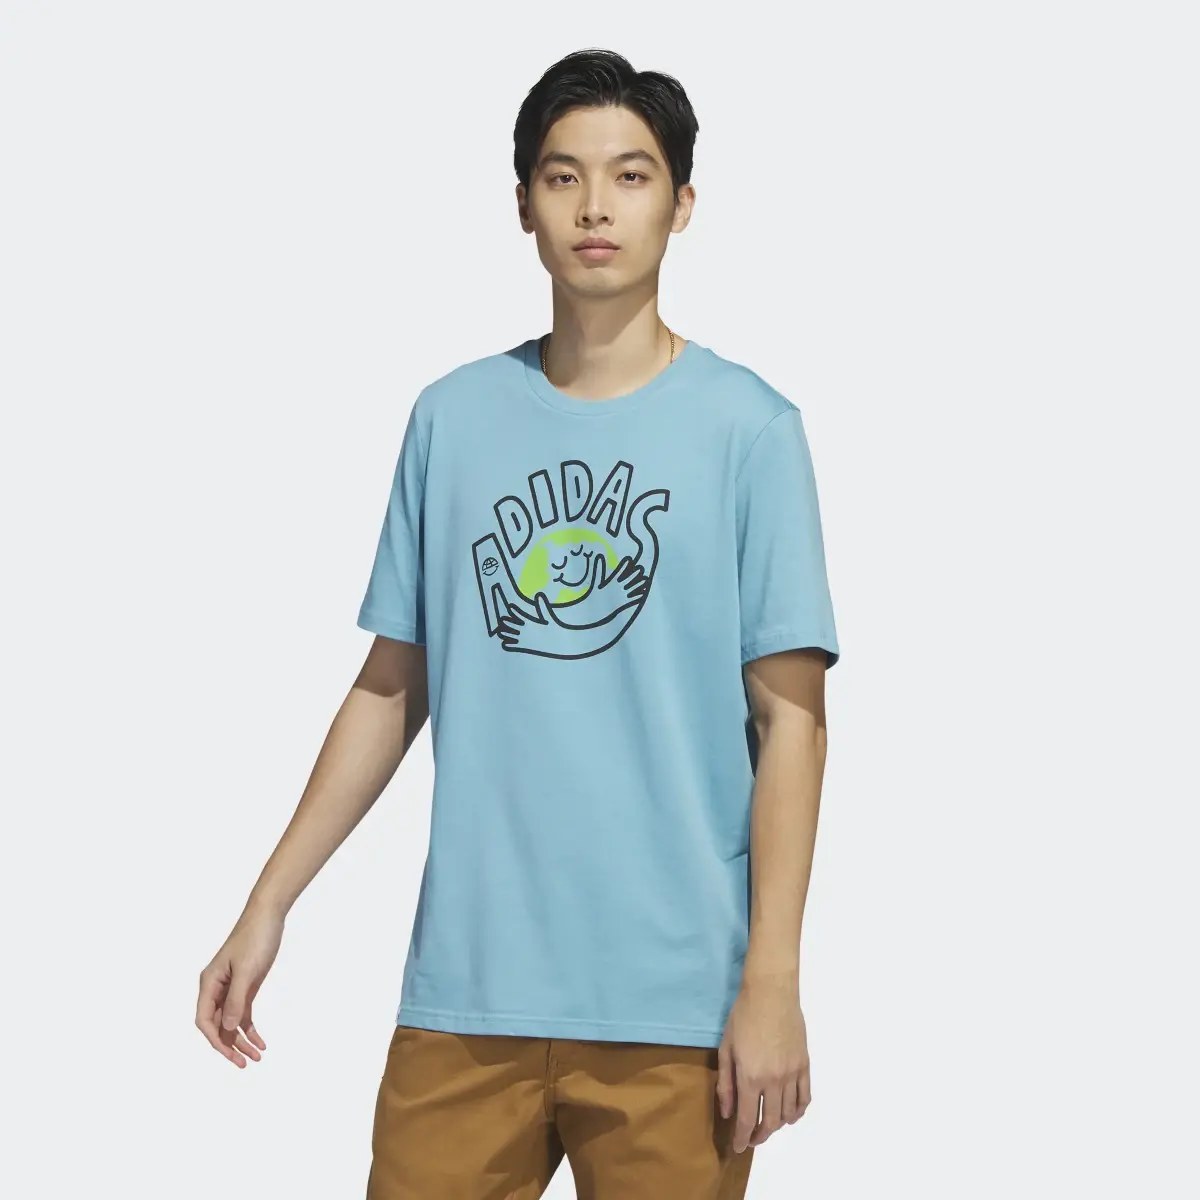 Adidas Change Through Sports Earth Graphic T-Shirt. 2